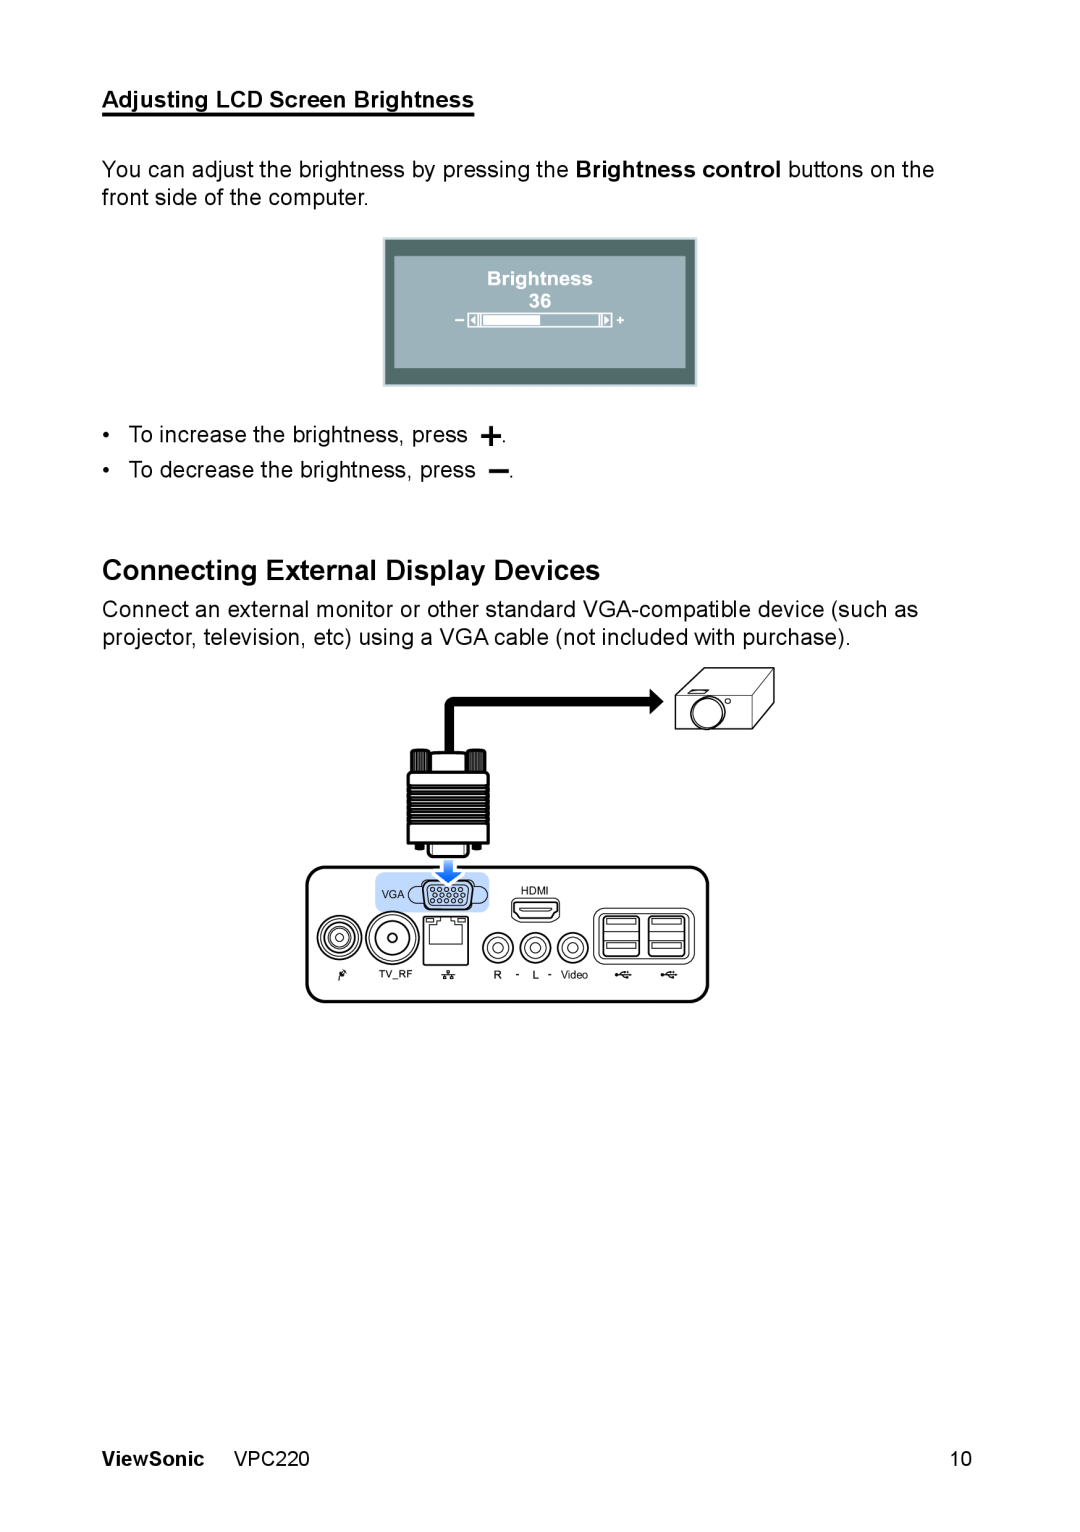 ViewSonic VS13426 manual Connecting External Display Devices, Adjusting LCD Screen Brightness 